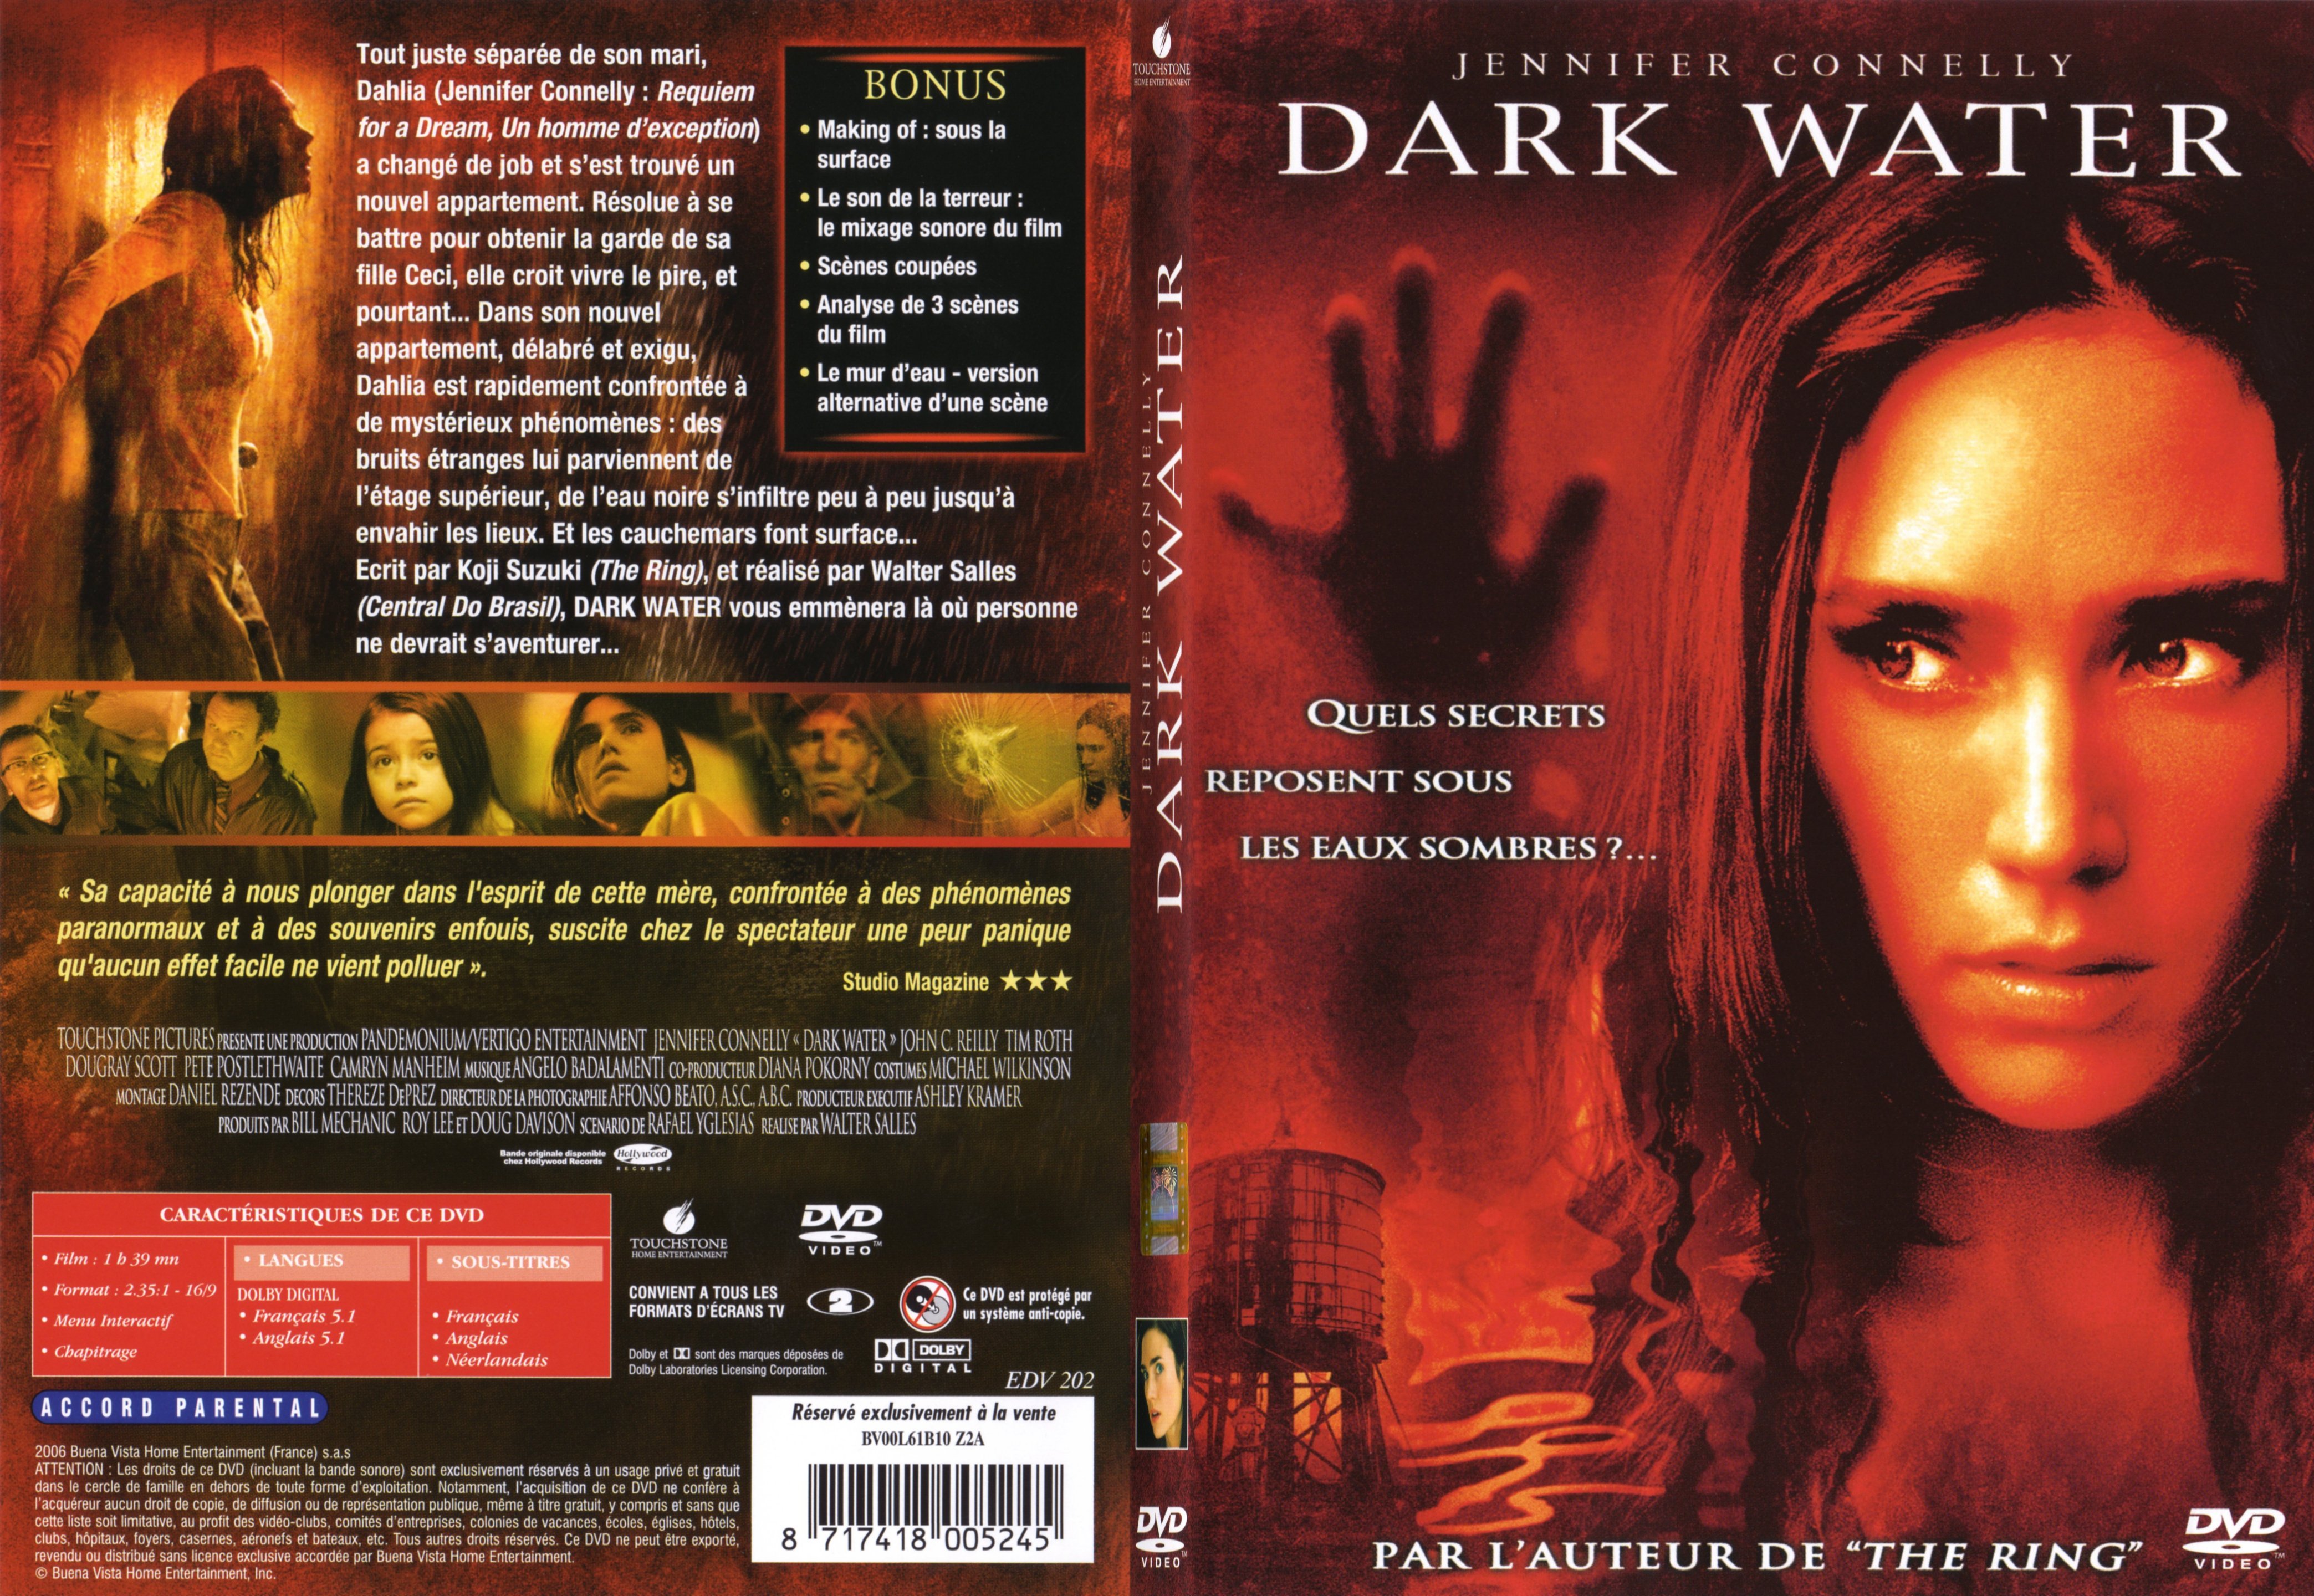 Jaquette DVD Dark water 2005 - SLIM